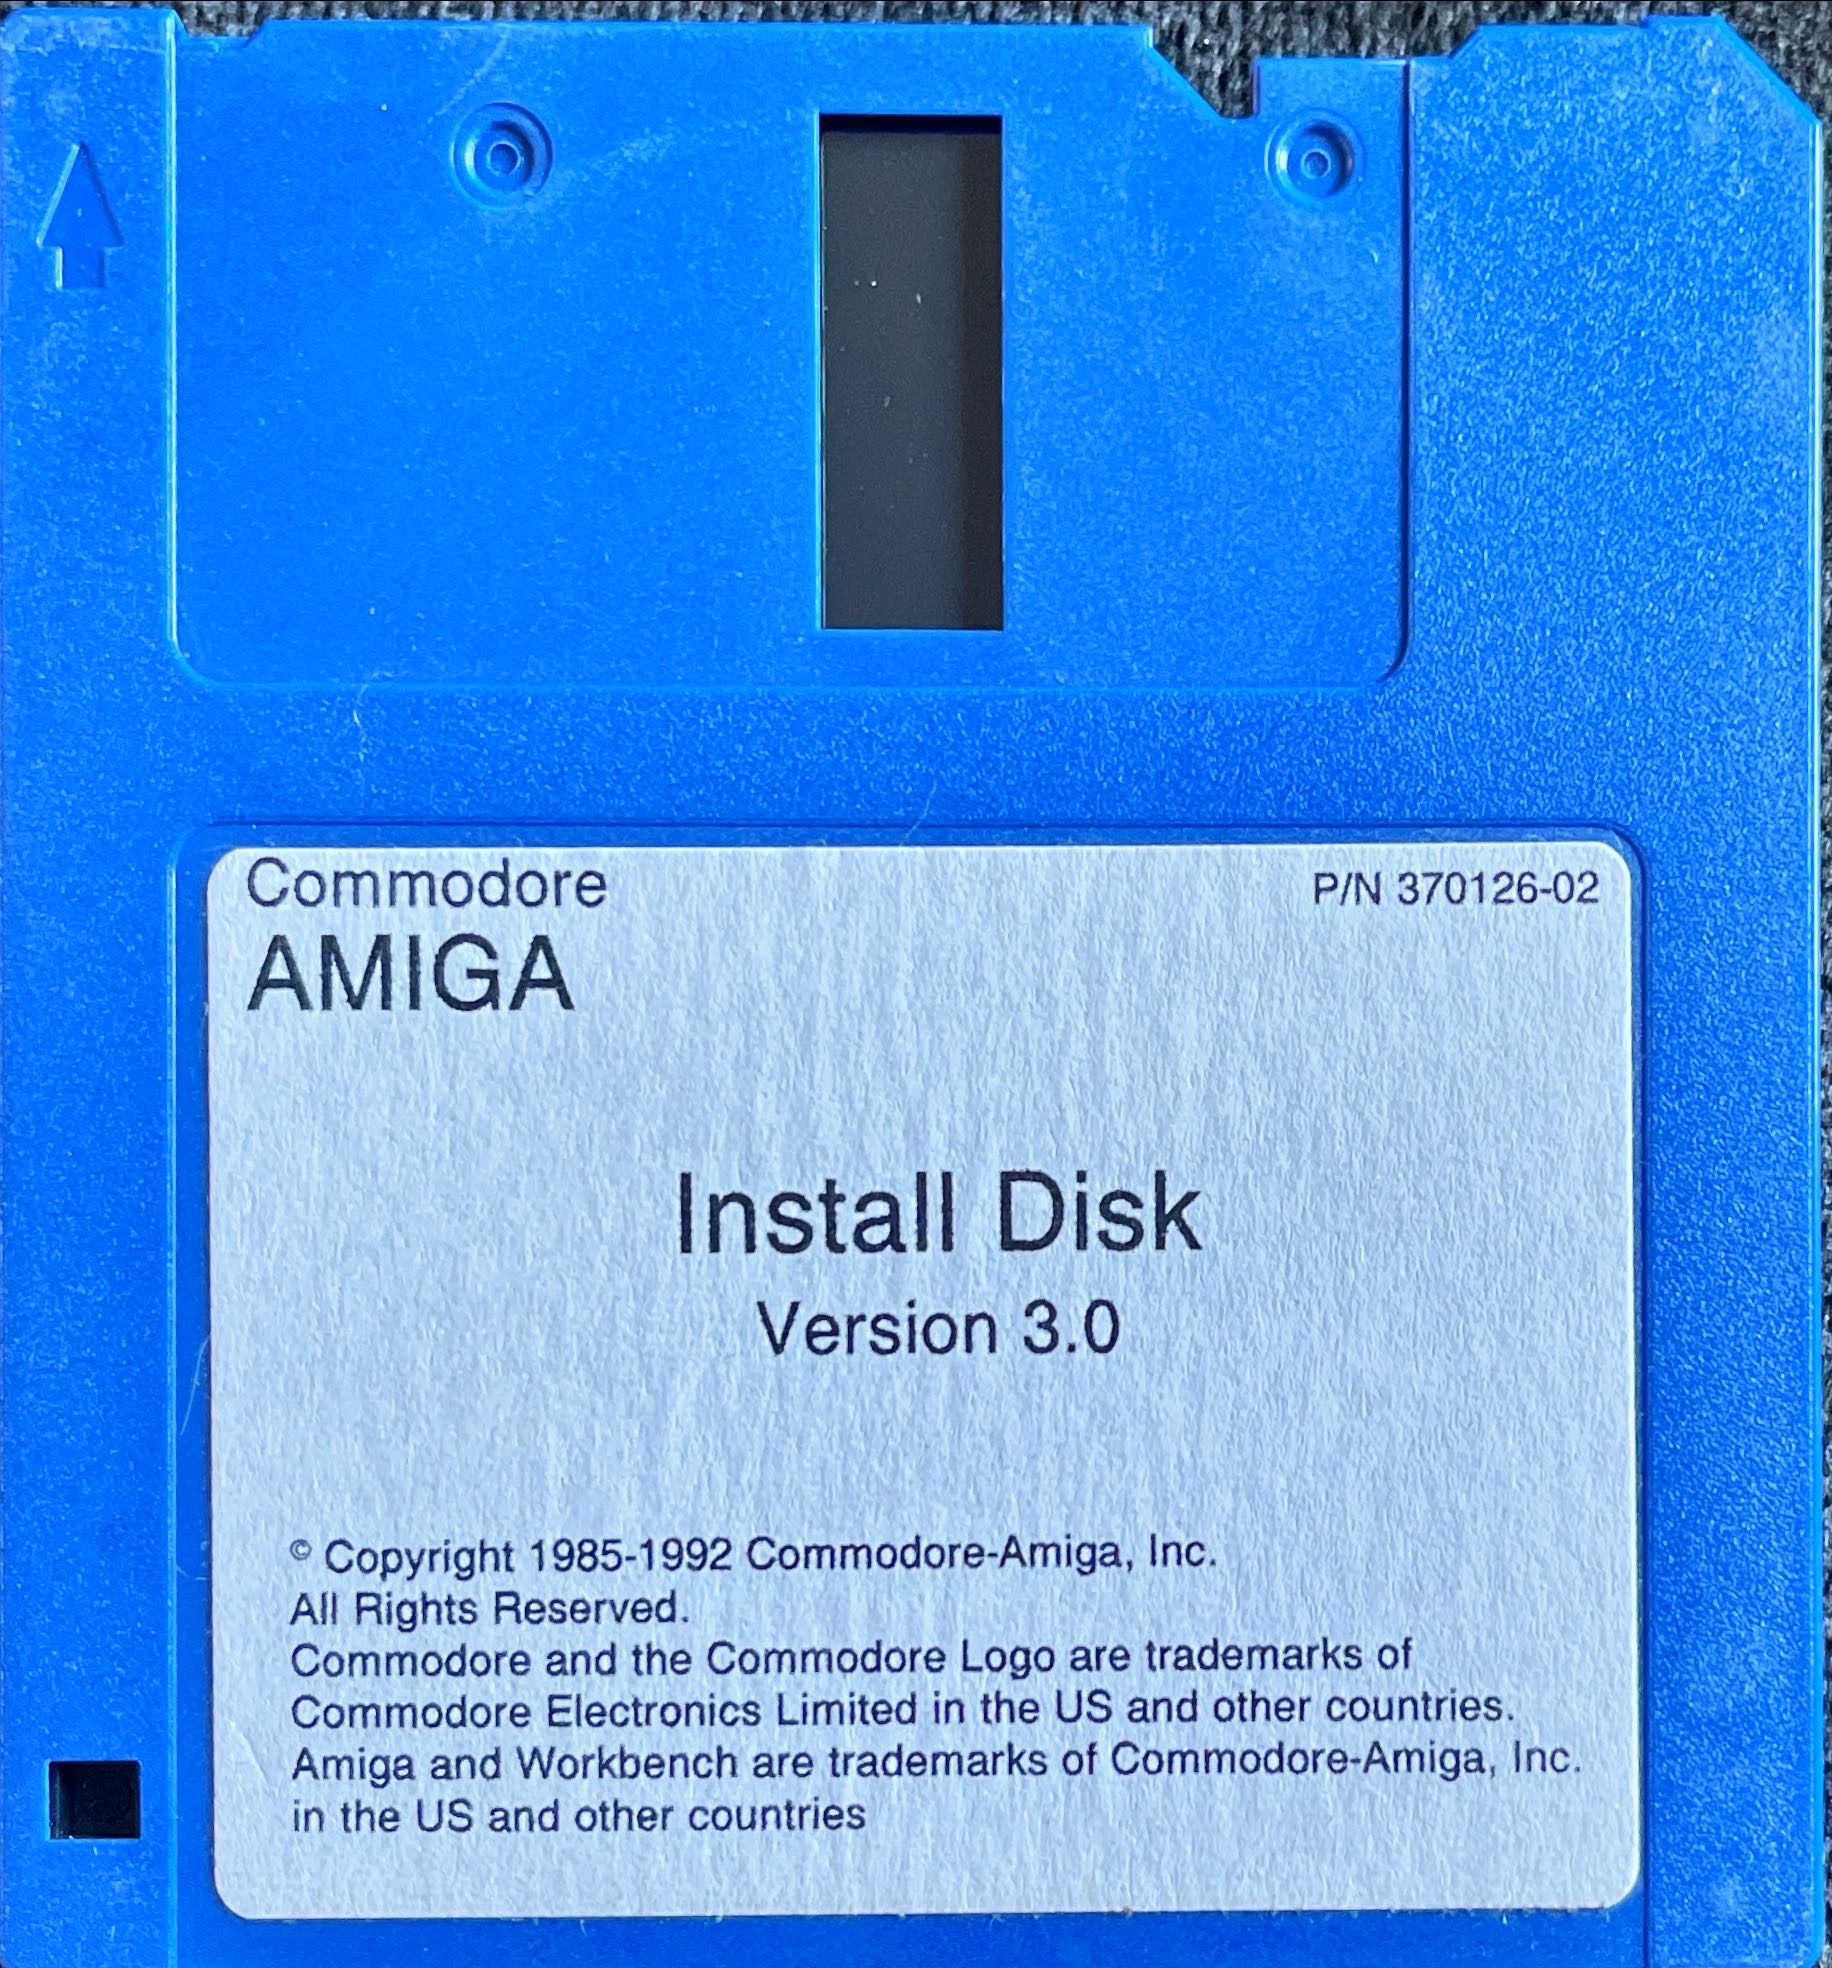 Install Disk 3.0